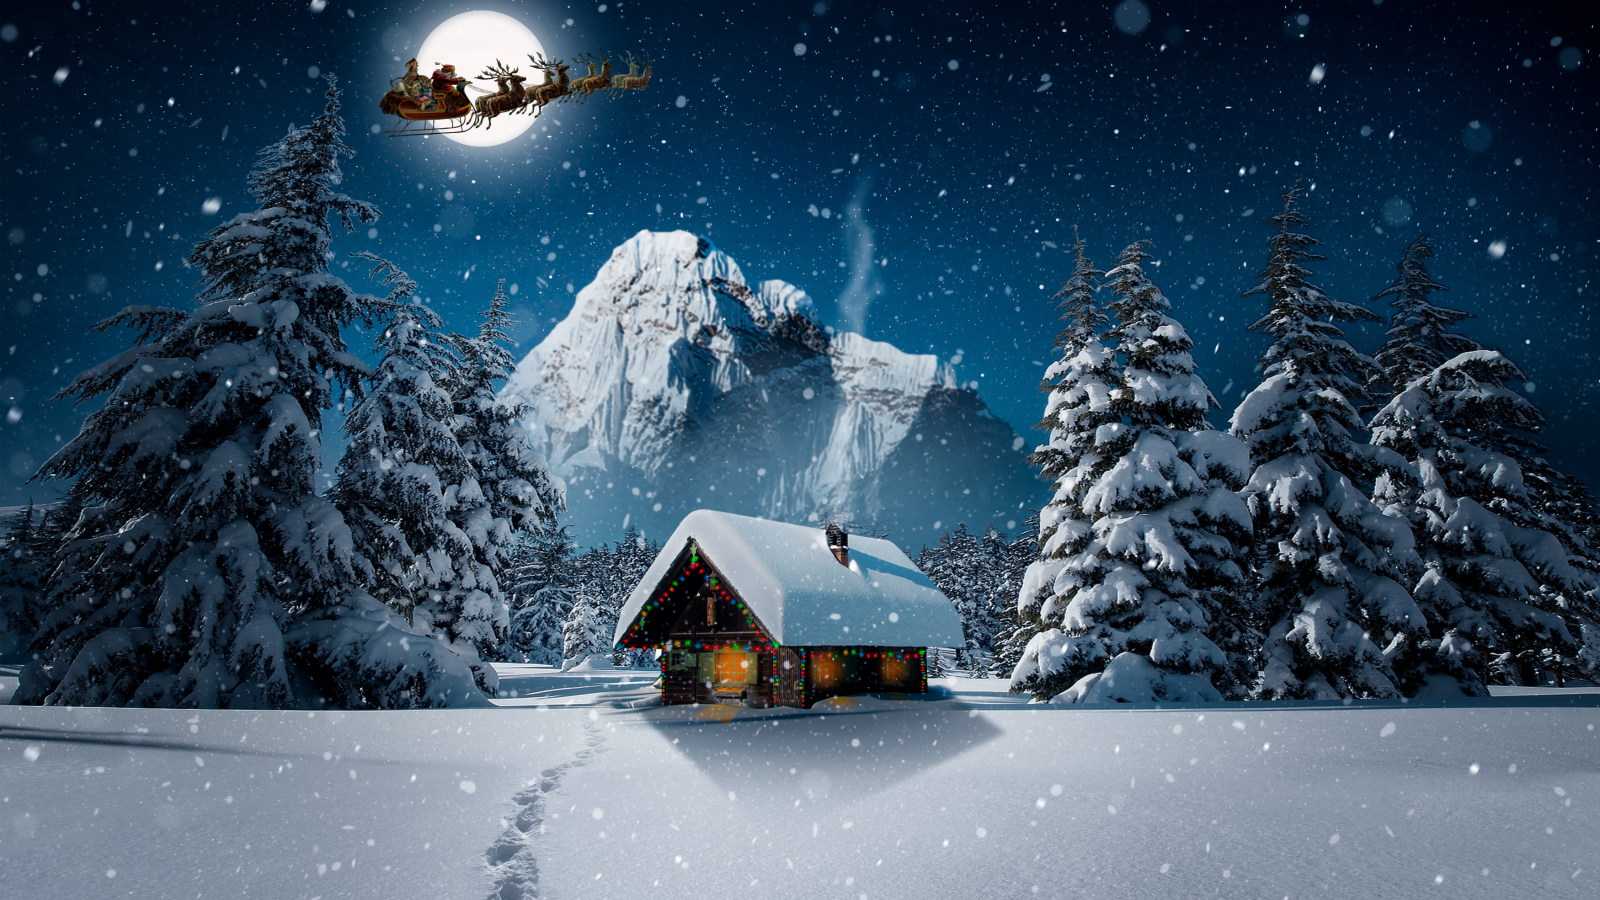 Download snowfall, winter, hut, house, winter, christmas 1600x900 wallpaper, 16:9 widescreen 1600x900 HD image, background, 17253